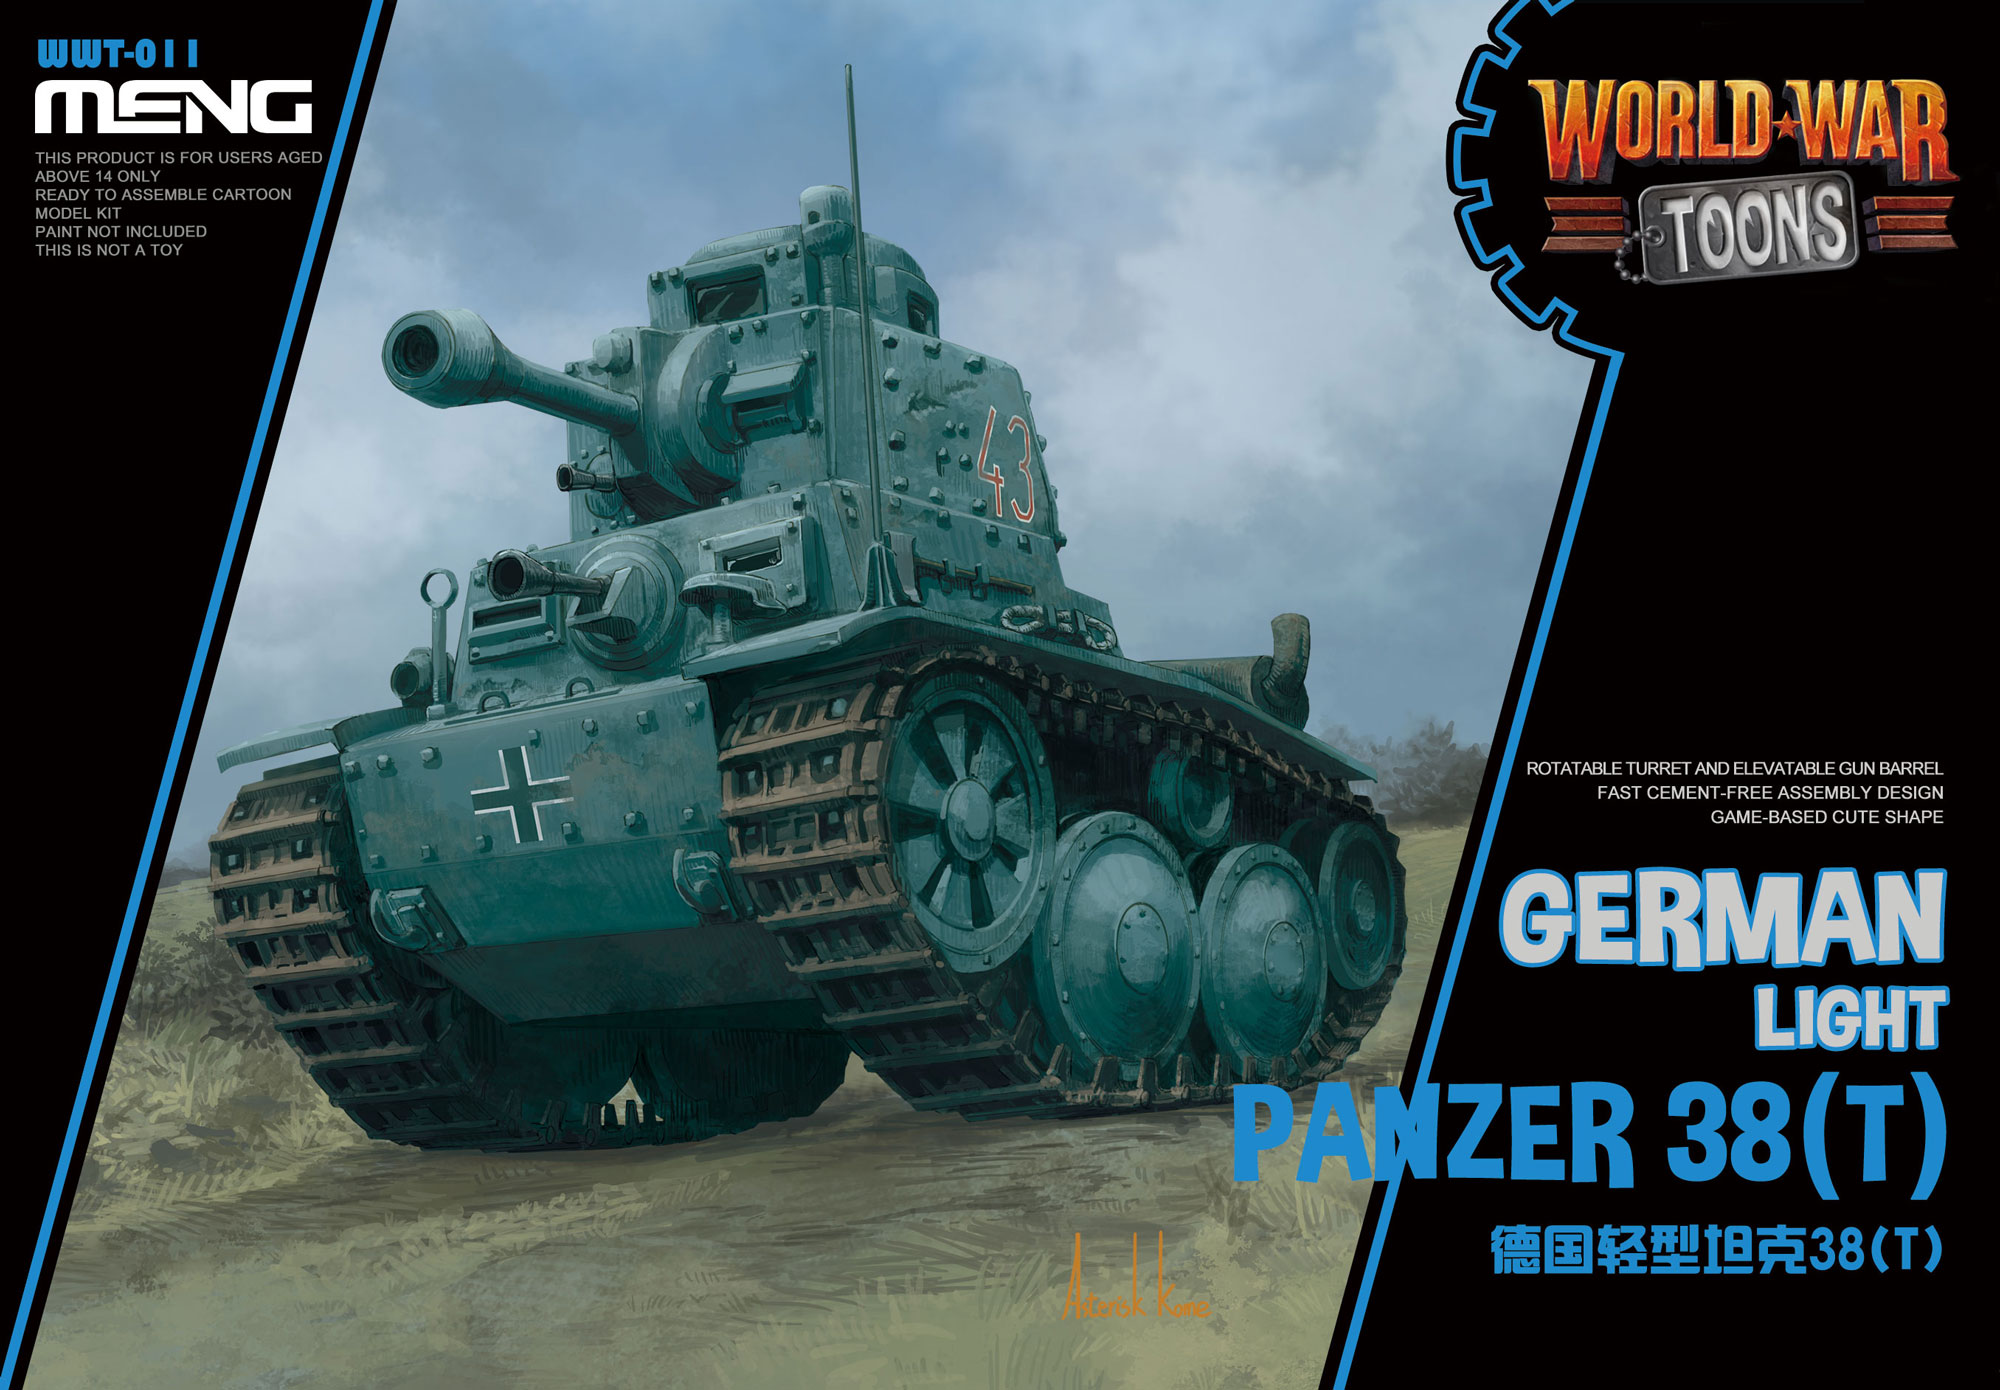 WWT-011  техника и вооружение  World War Toons Panzer 38(t) German Light Tank